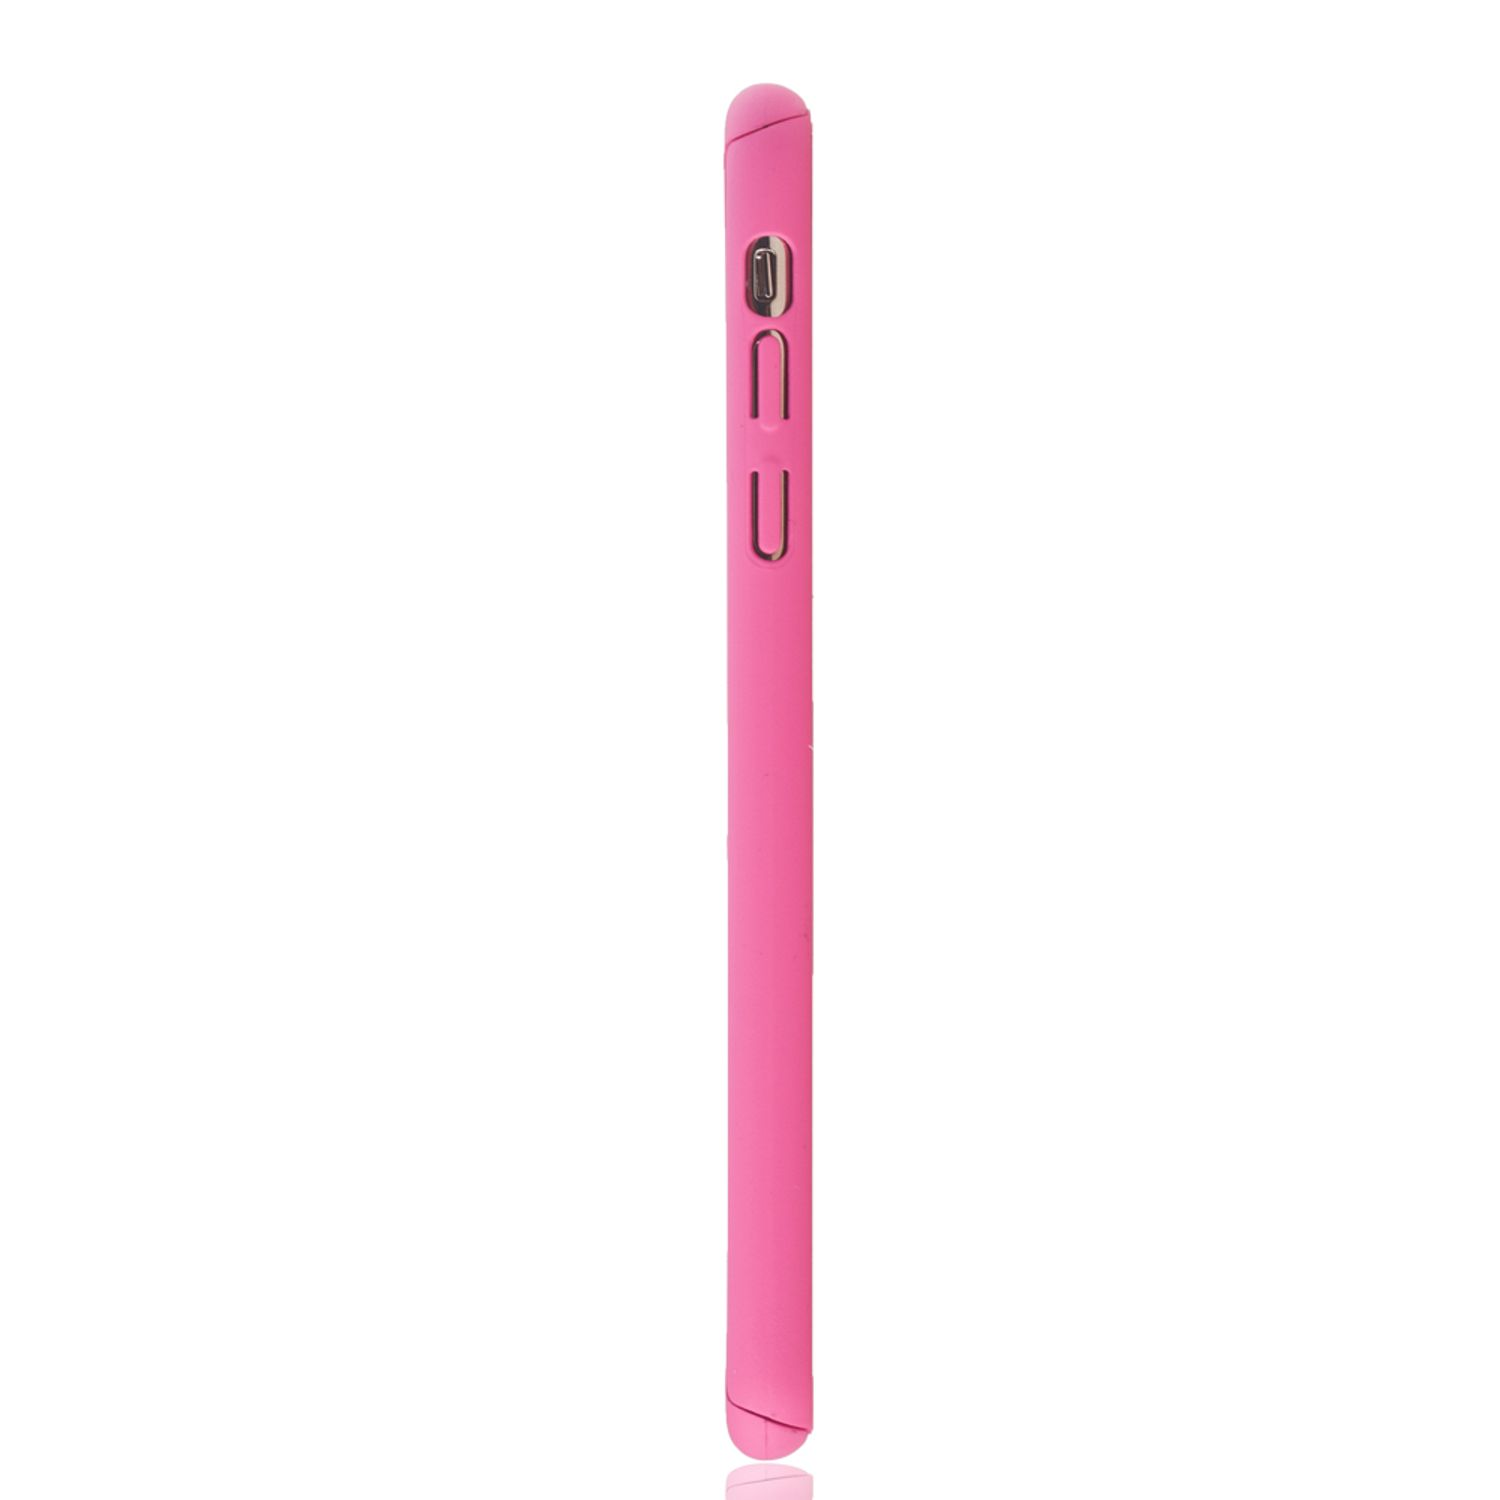 KÖNIG Cover, Pink Apple, Full XS Max, DESIGN Schutzhülle, iPhone